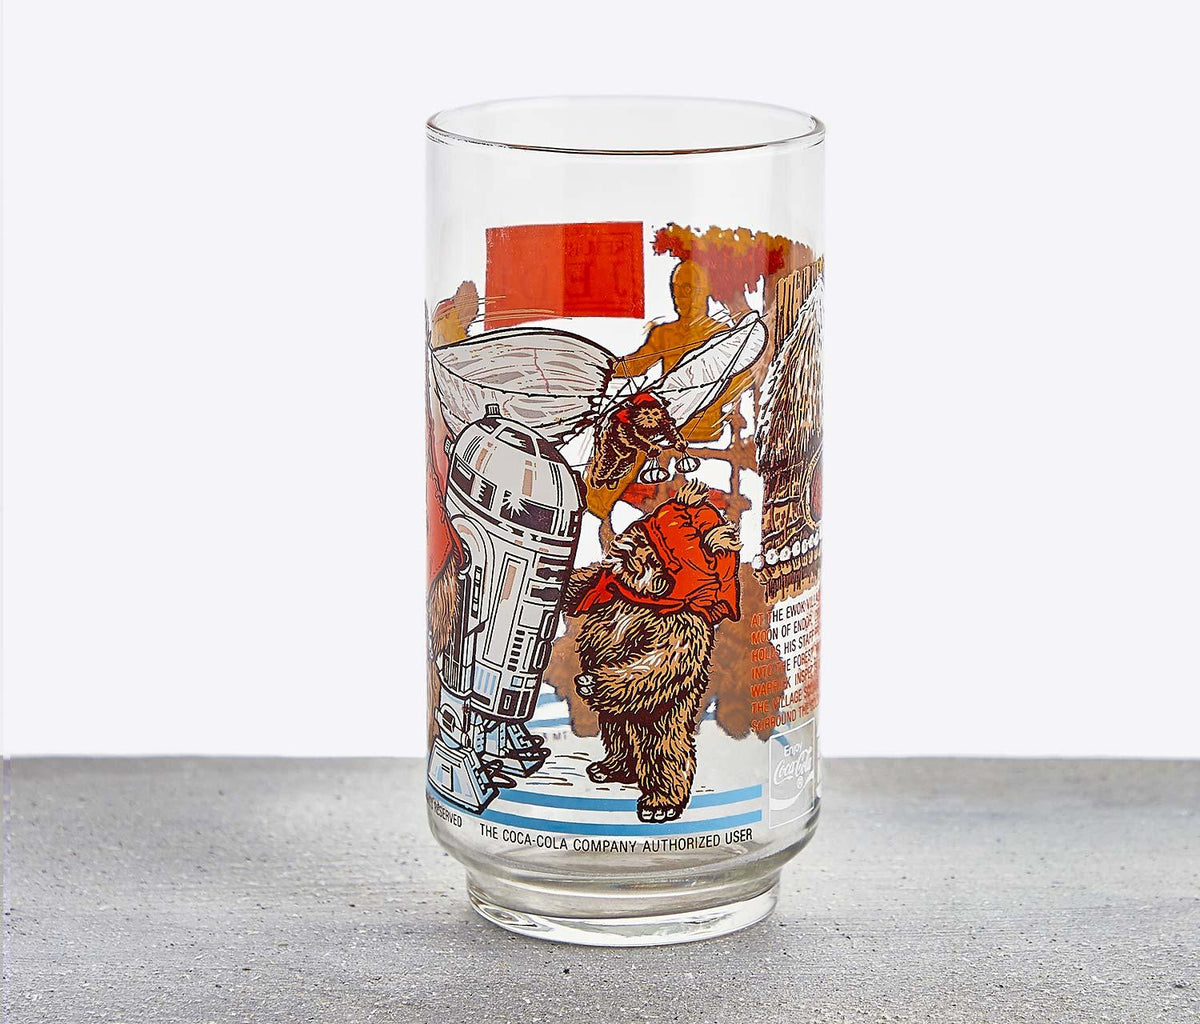 Star Wars Han Solo Return of the Jedi Vintage Glass